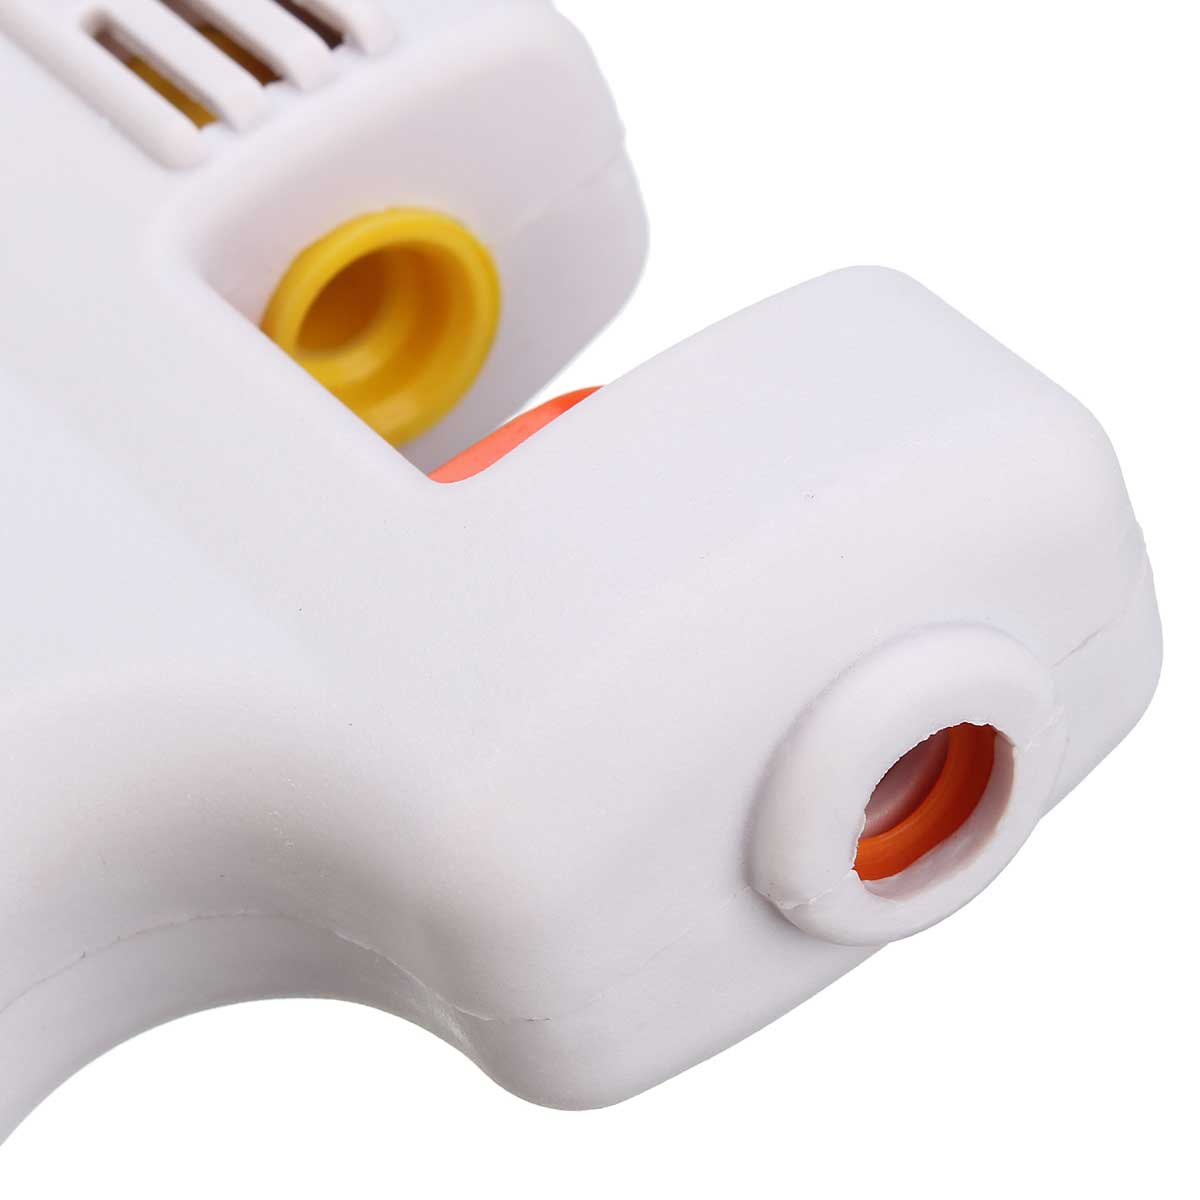 20W White Heating Hot Melt Electric Glue Gun Crafts Repair Tools